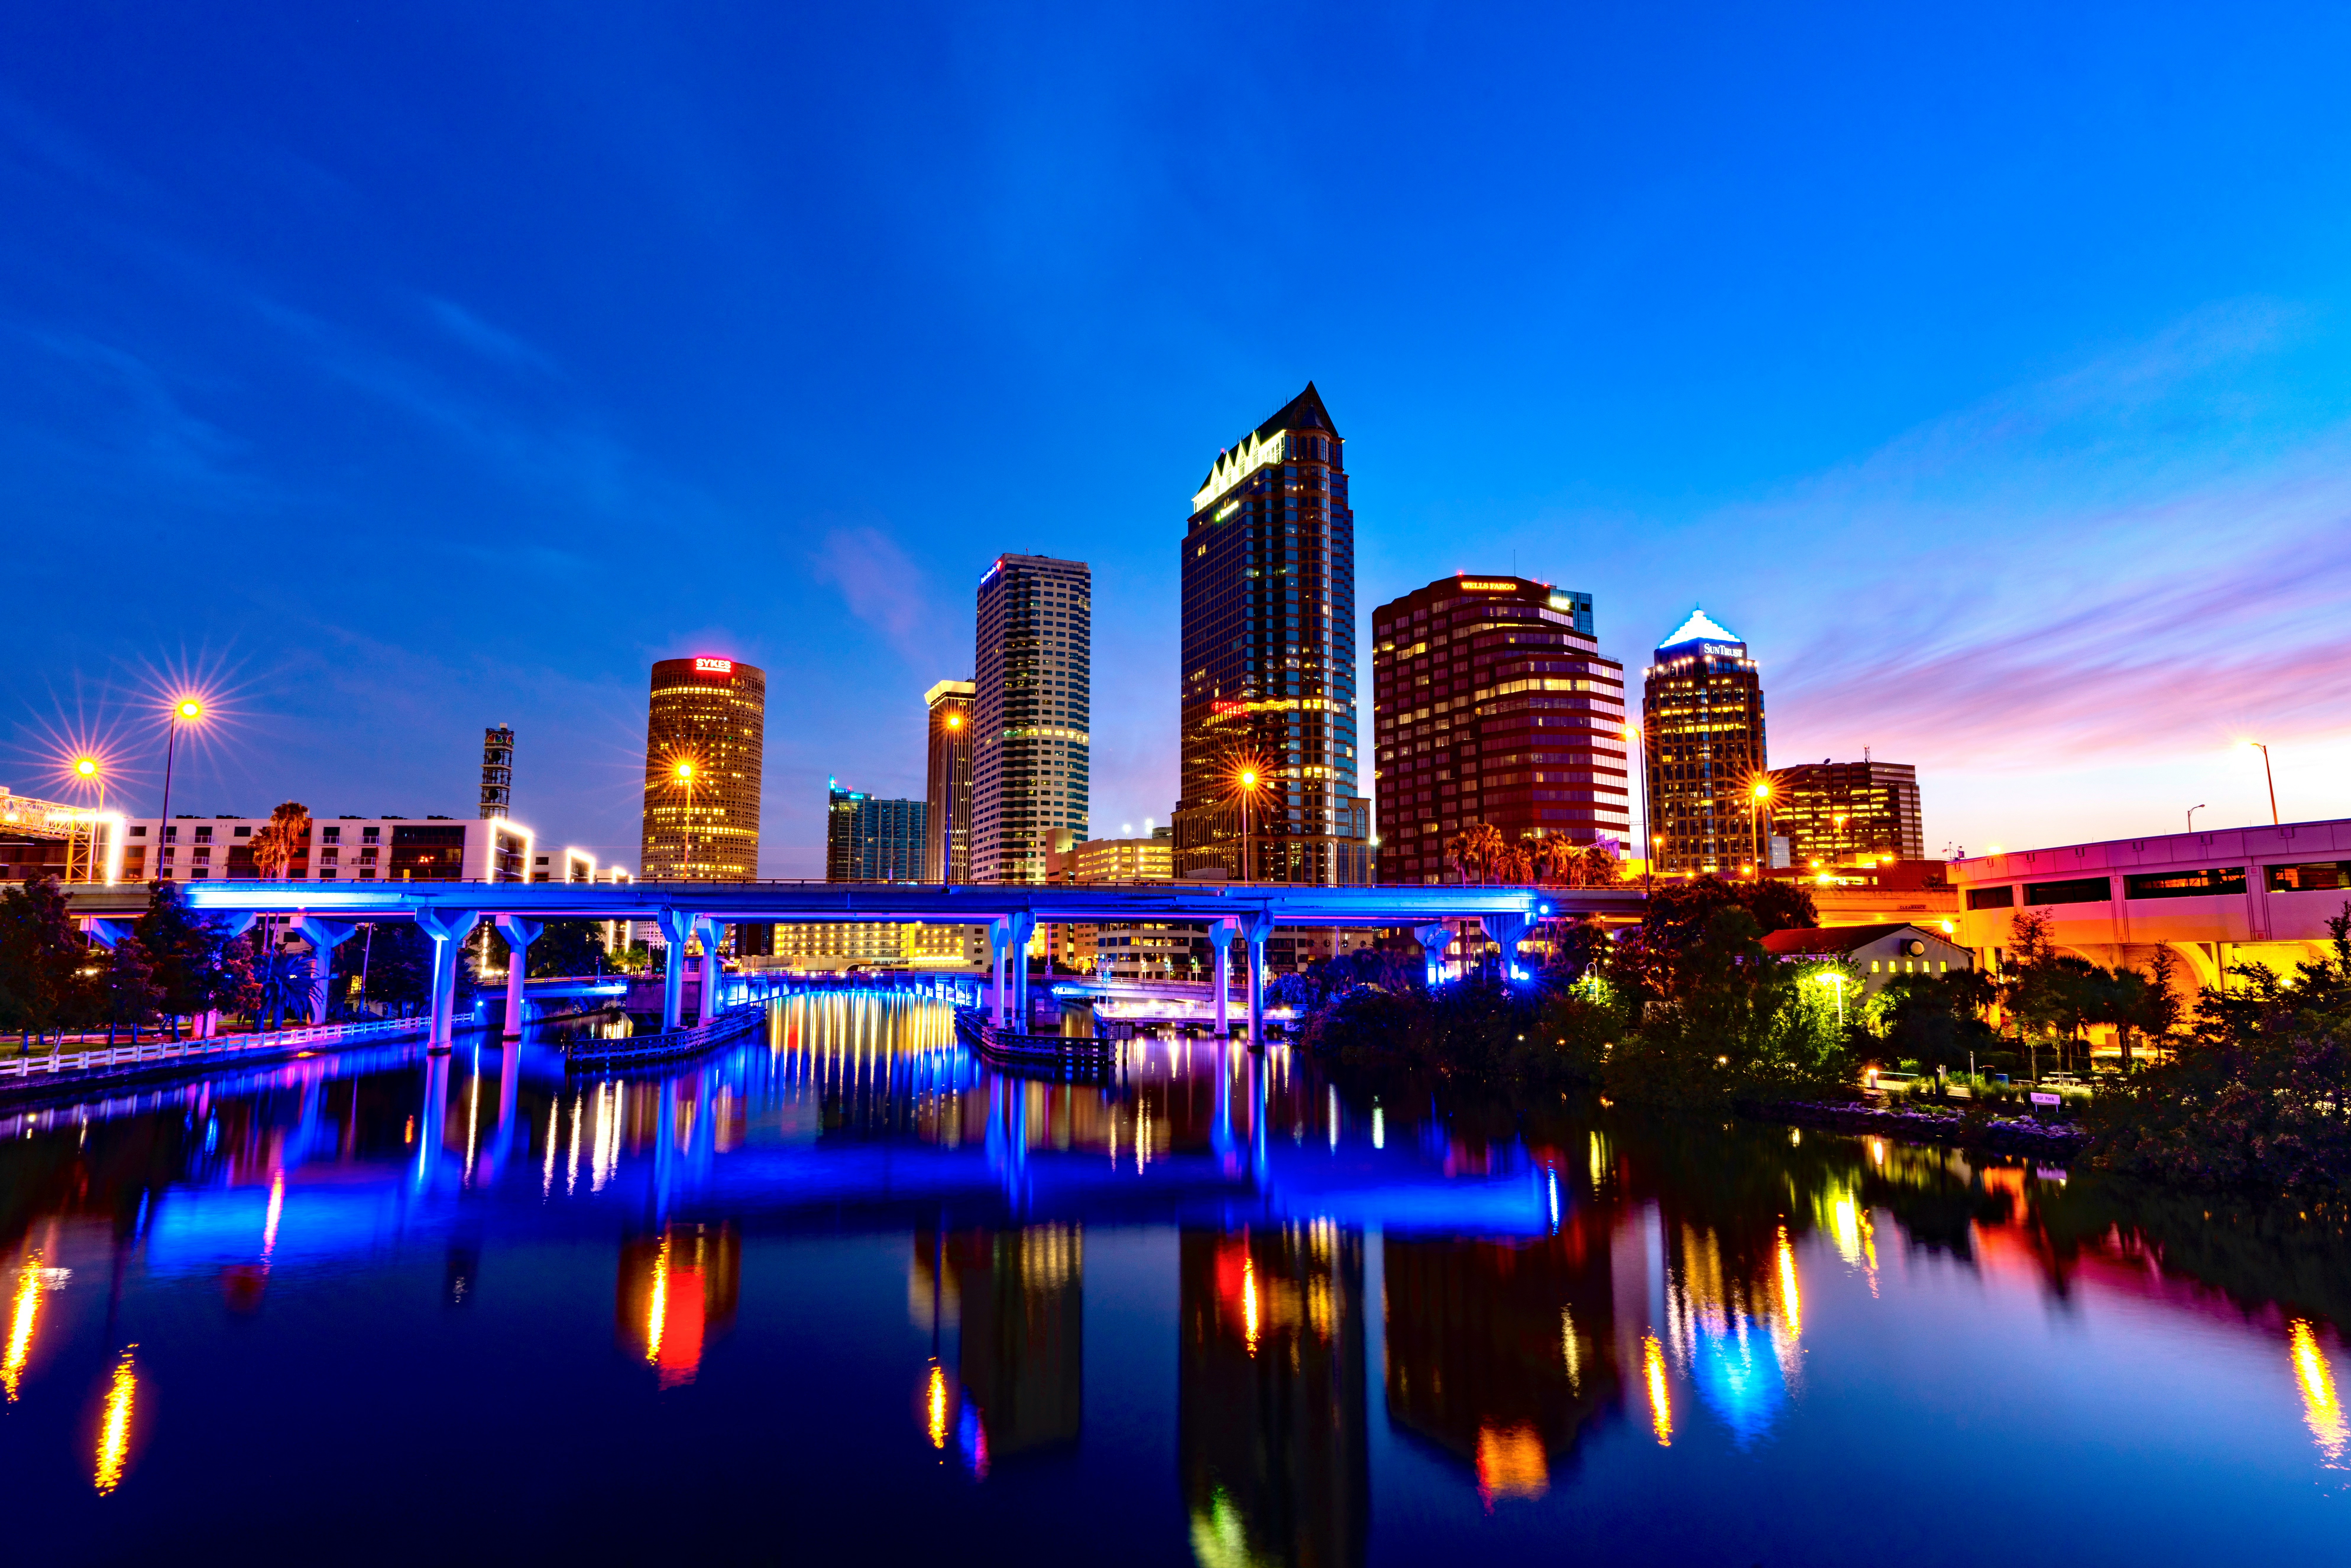 Tampa Bay skyline at night